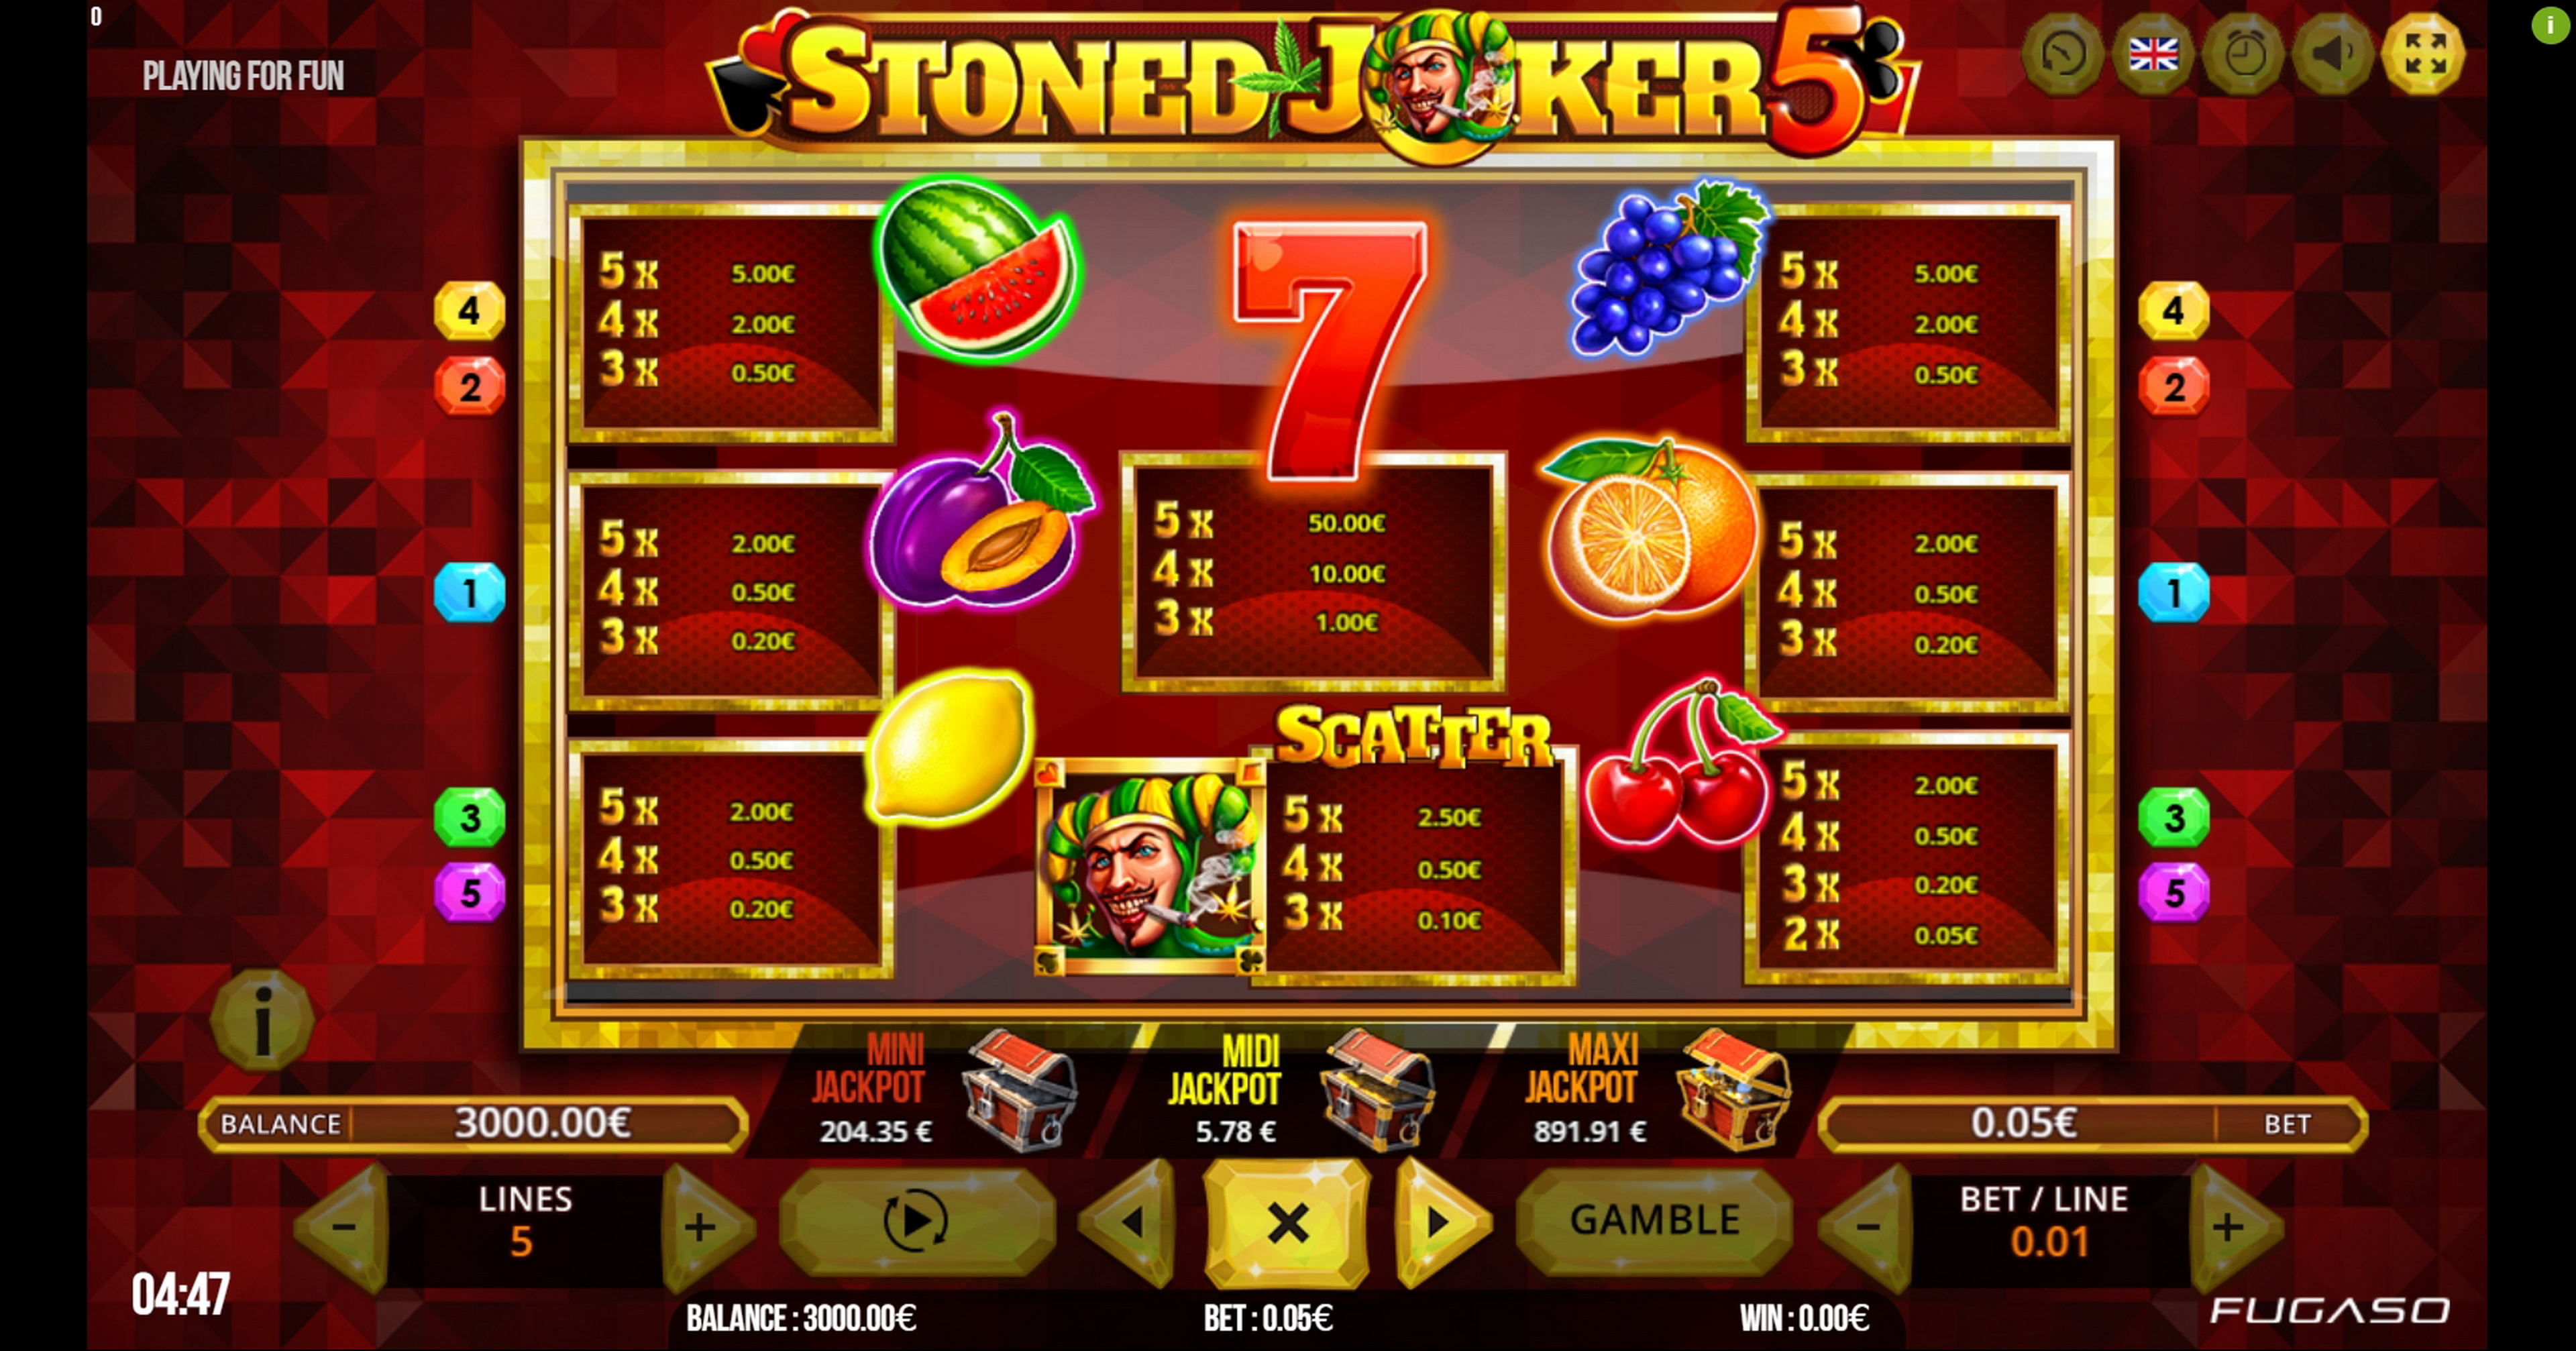 Info of Stoned Joker 5 Slot Game by Fugaso